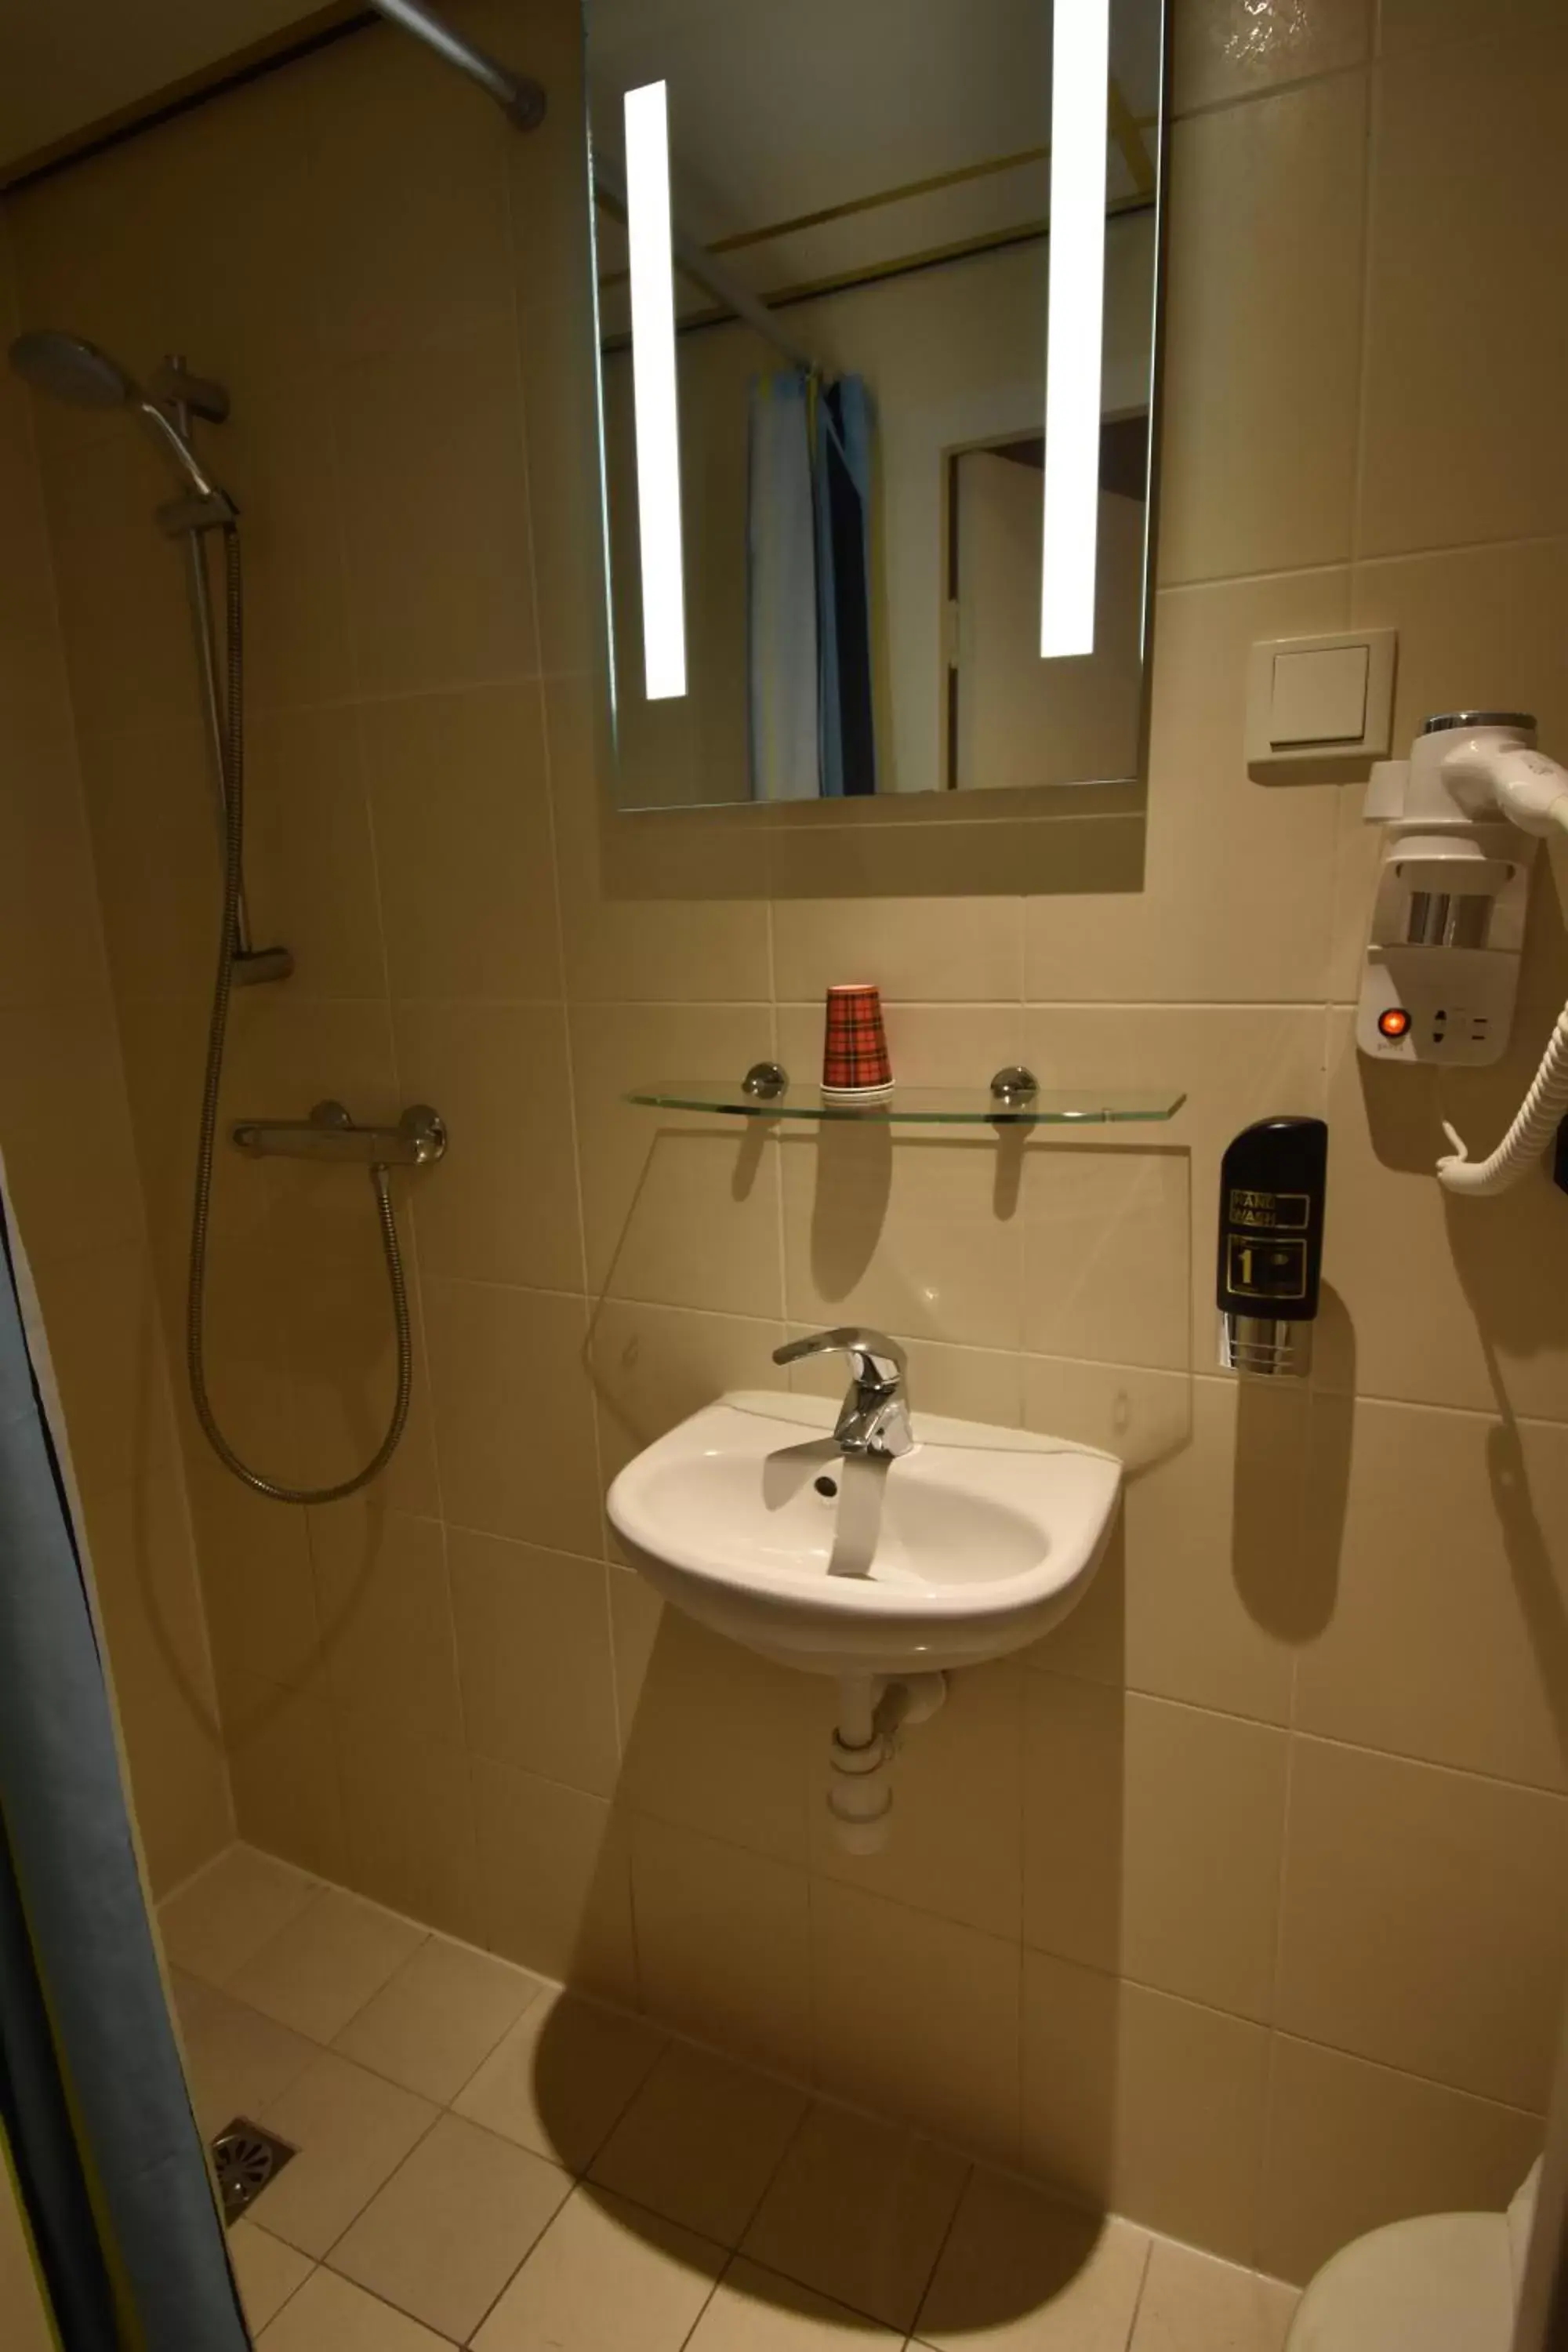 Bathroom in ITC Hotel